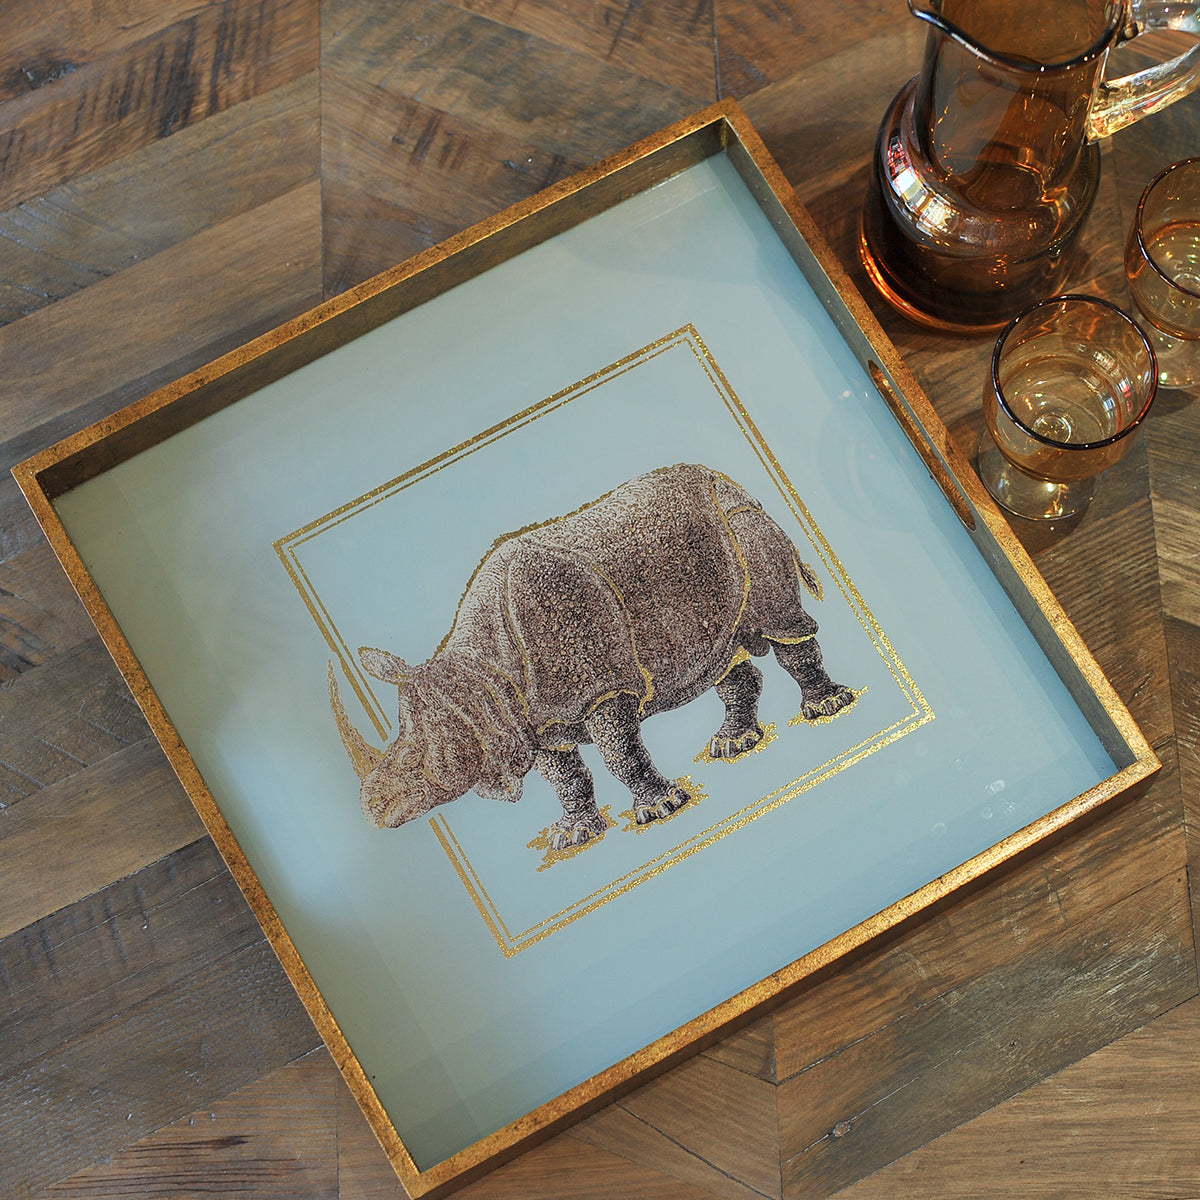 Gold Square Display Tray Rhino - Mrs Robinson